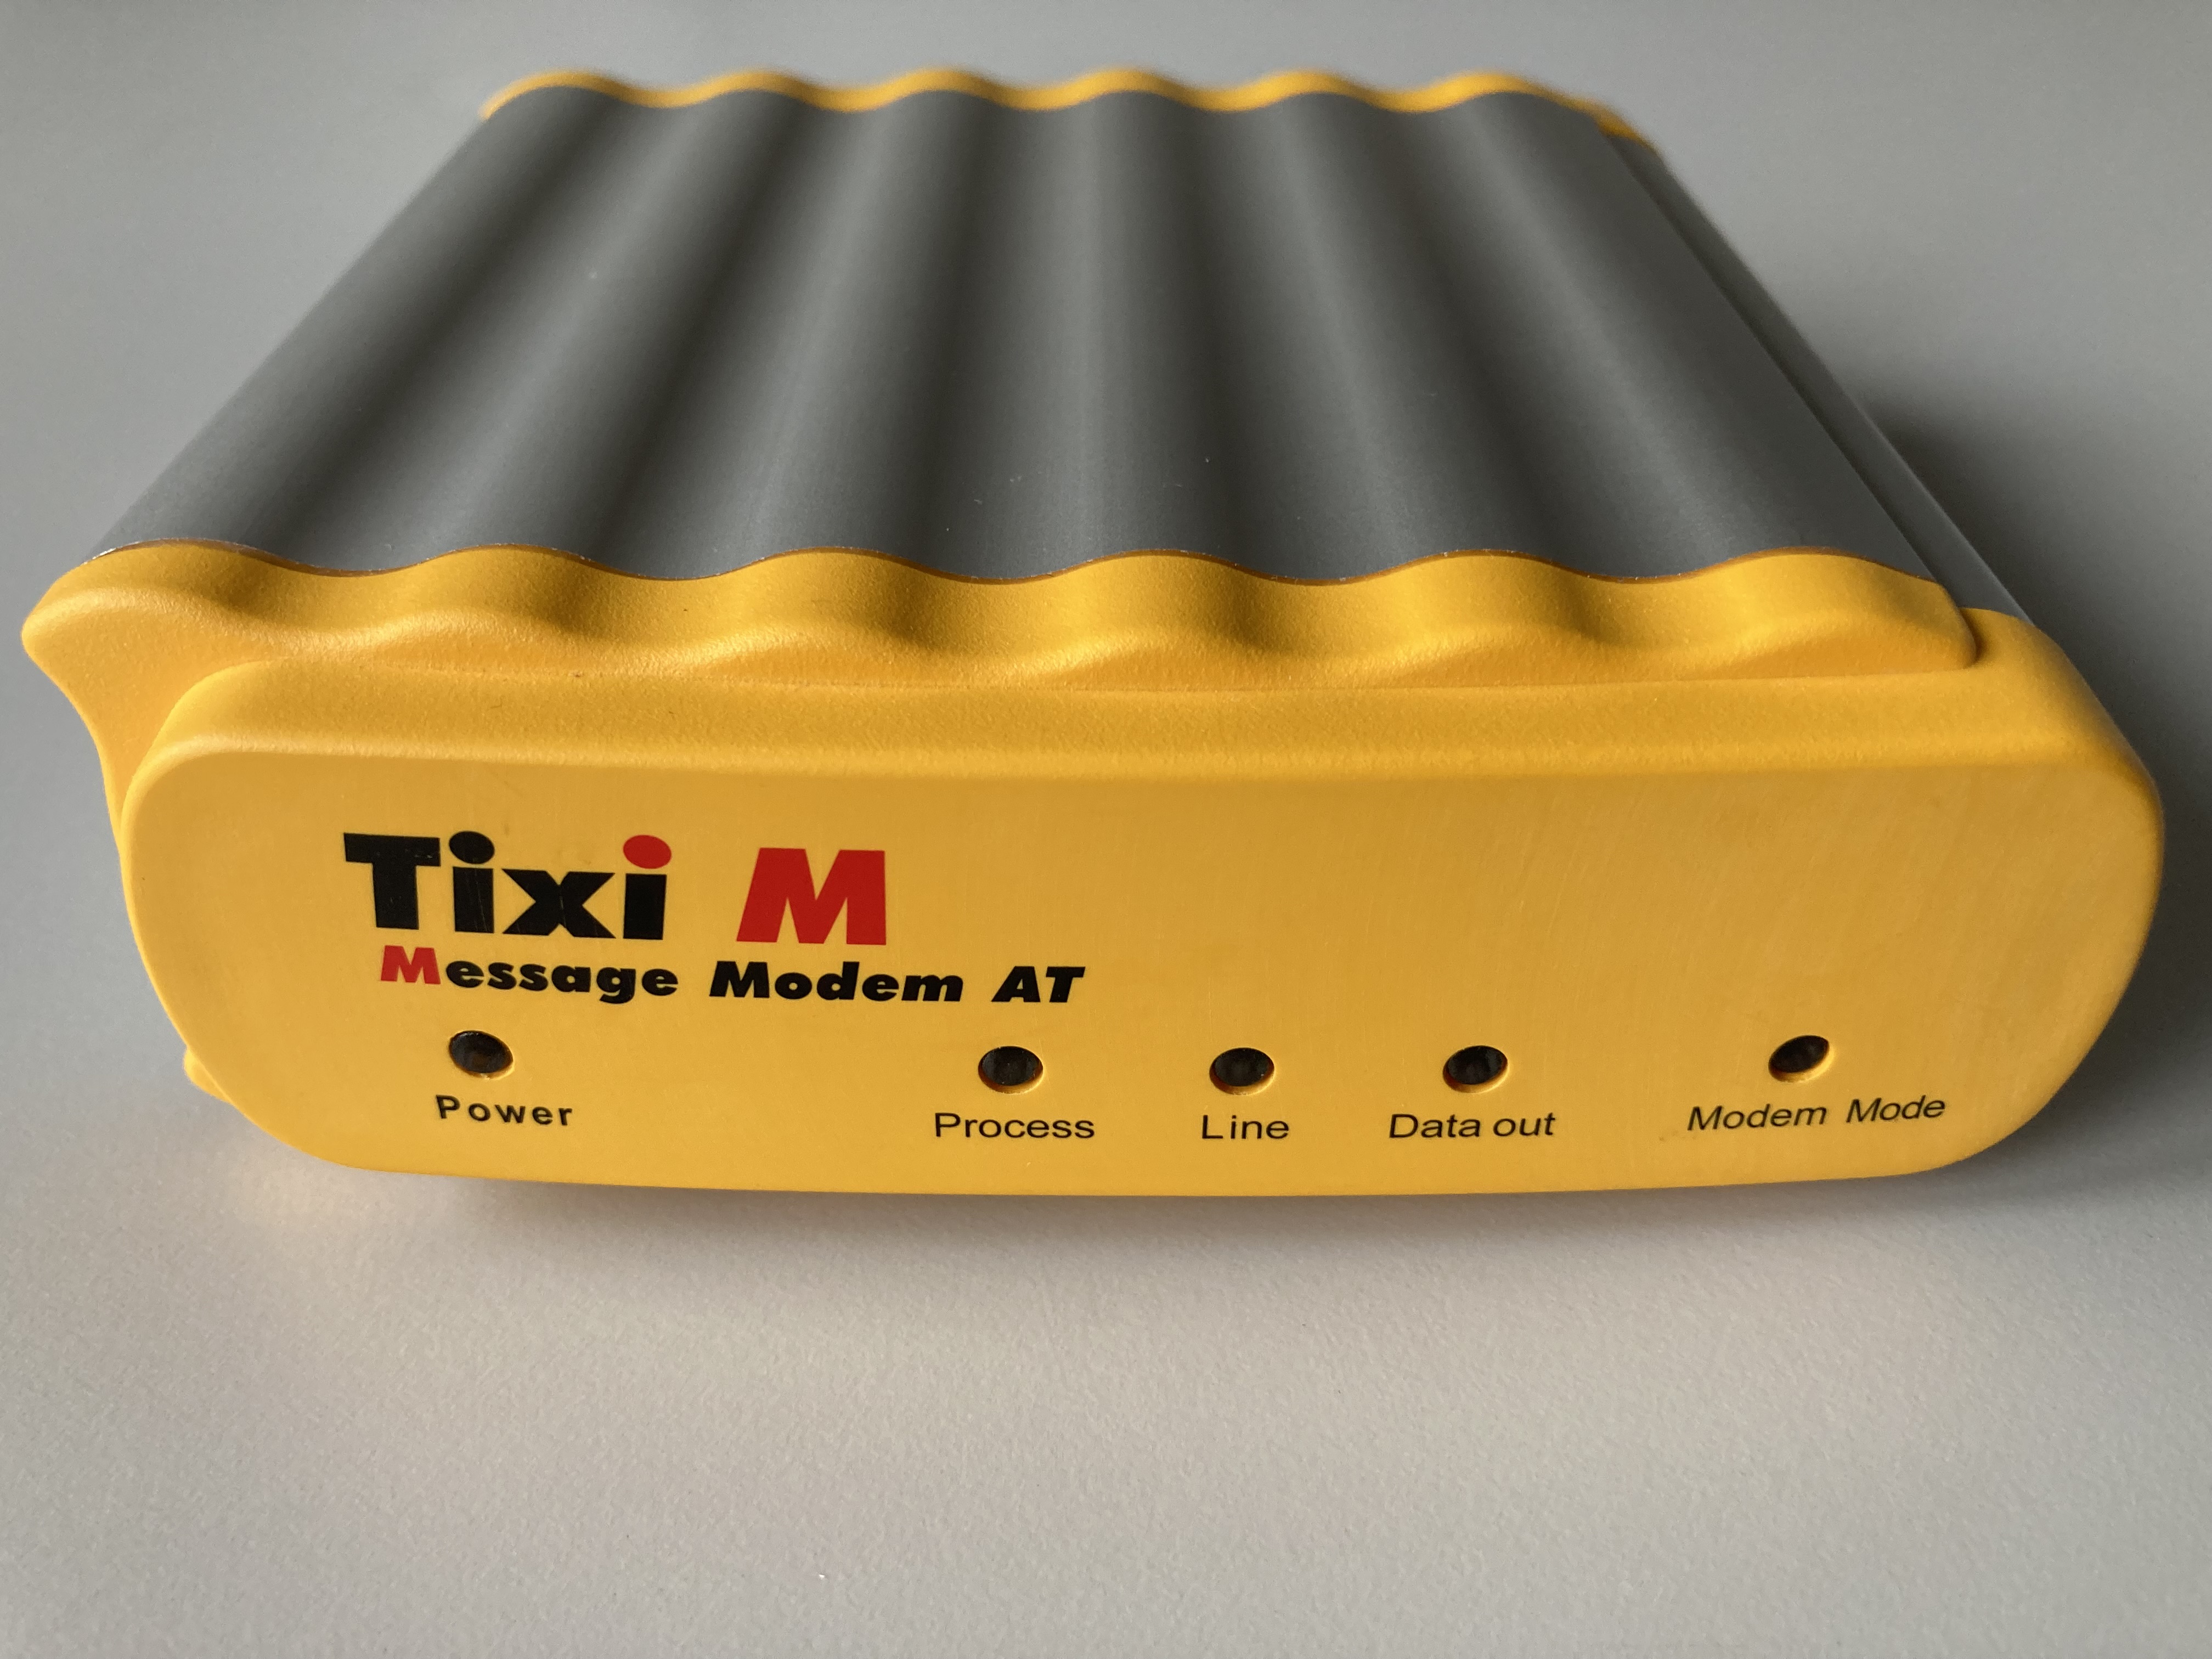 Tixi_Message_Modem_V90-case-front1.jpg